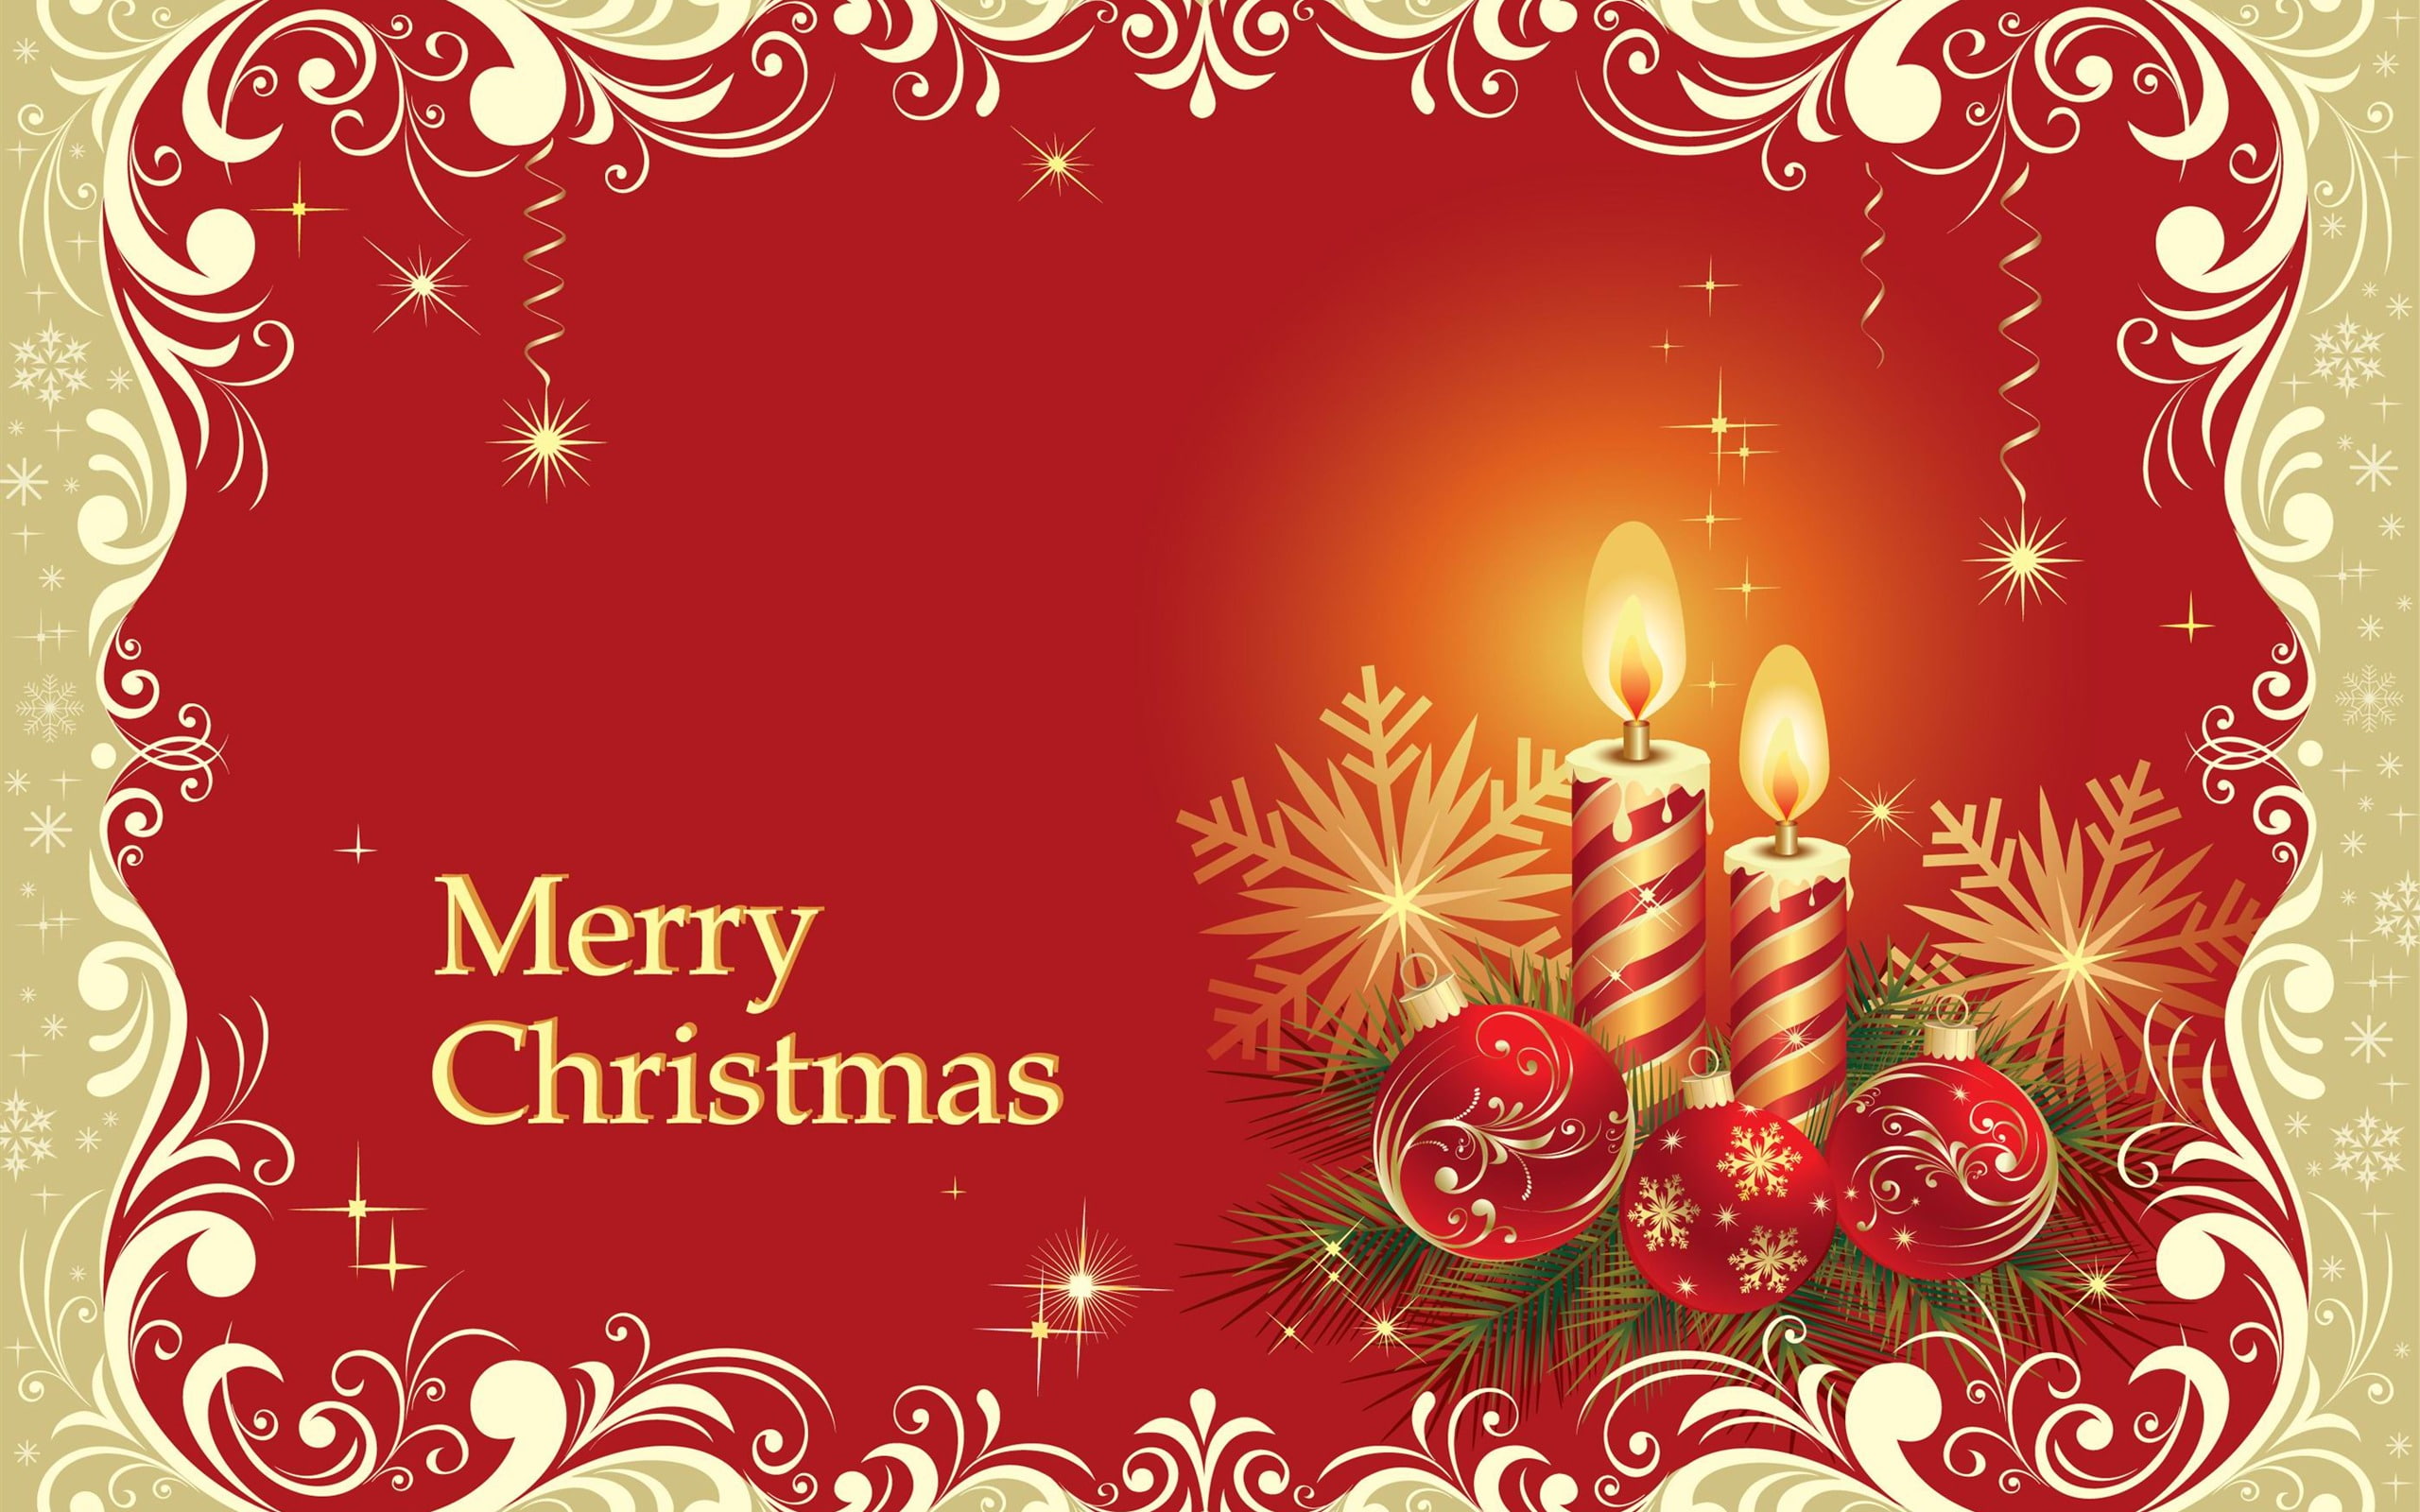 Christmas Card Greetings-Holiday desktop wallpaper, Merry Christmas template